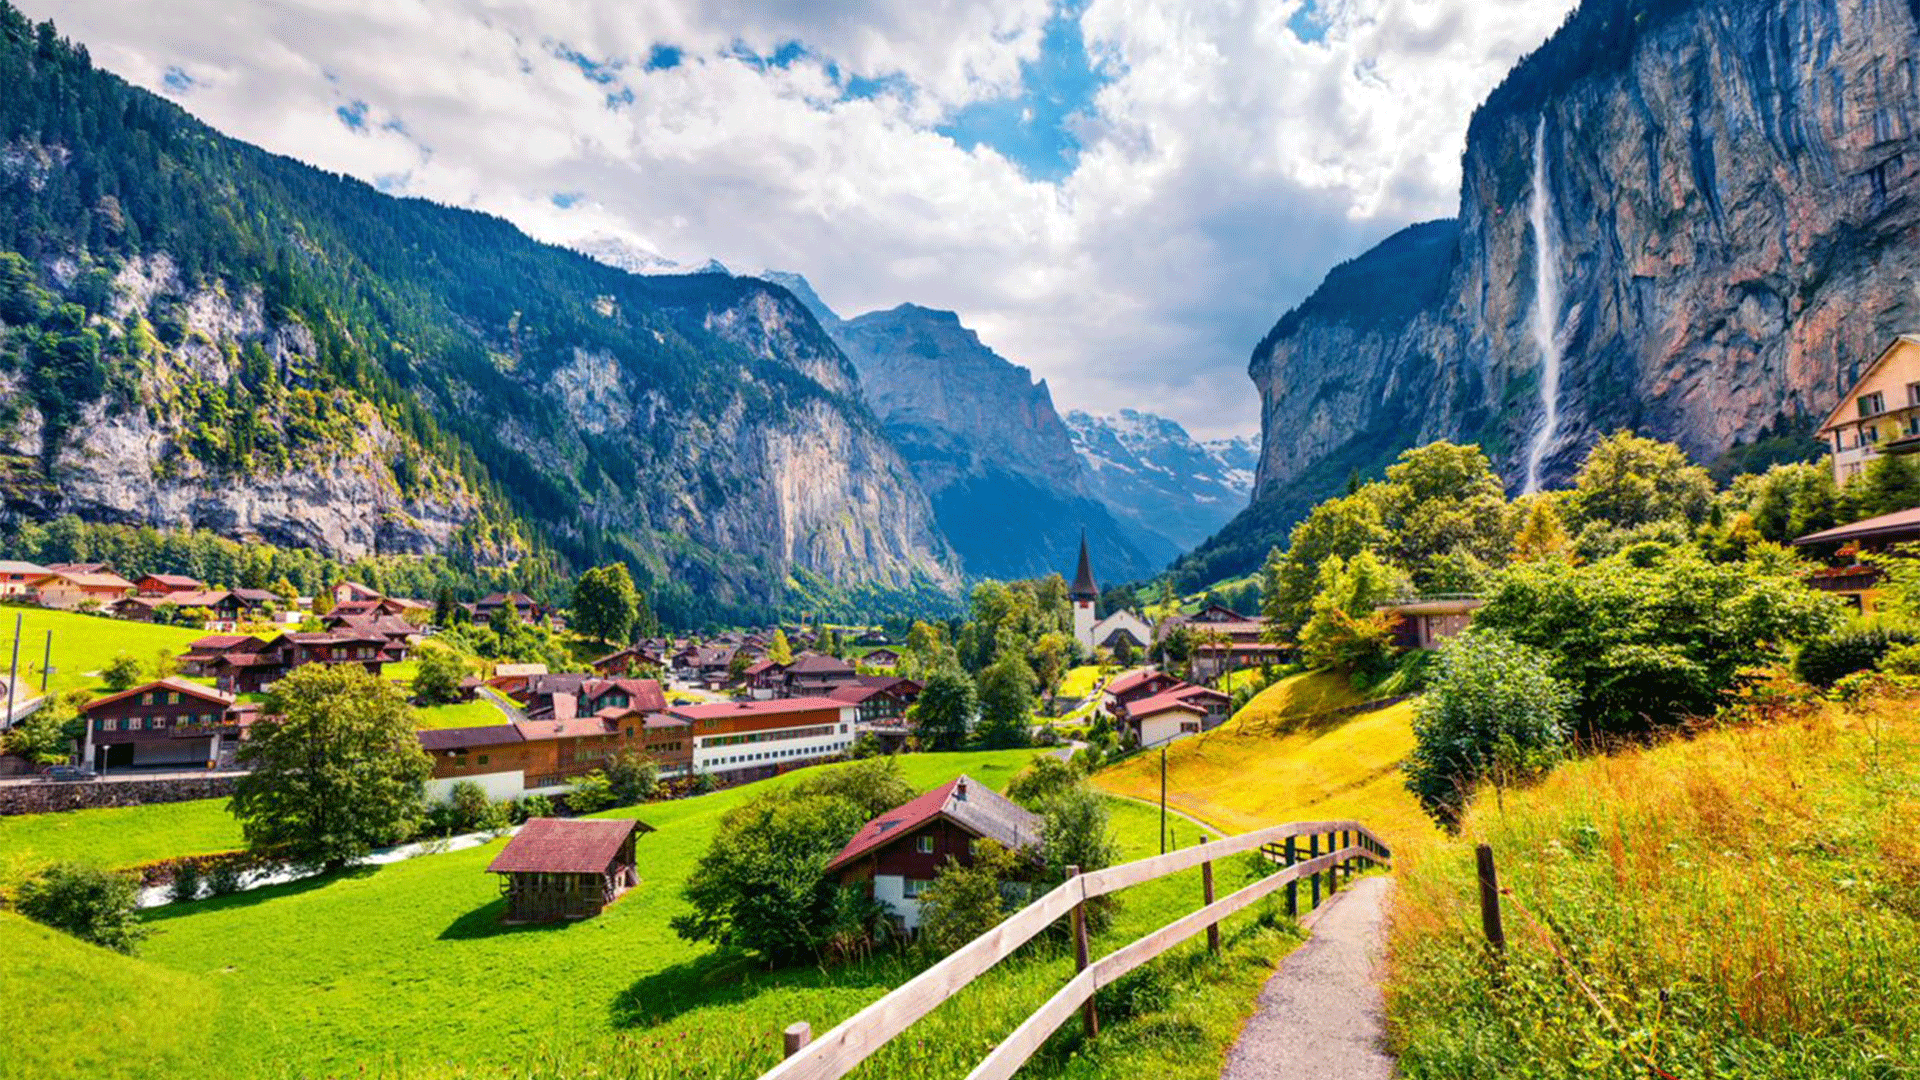 Landscape of Lauterbrunnen, Switzerland